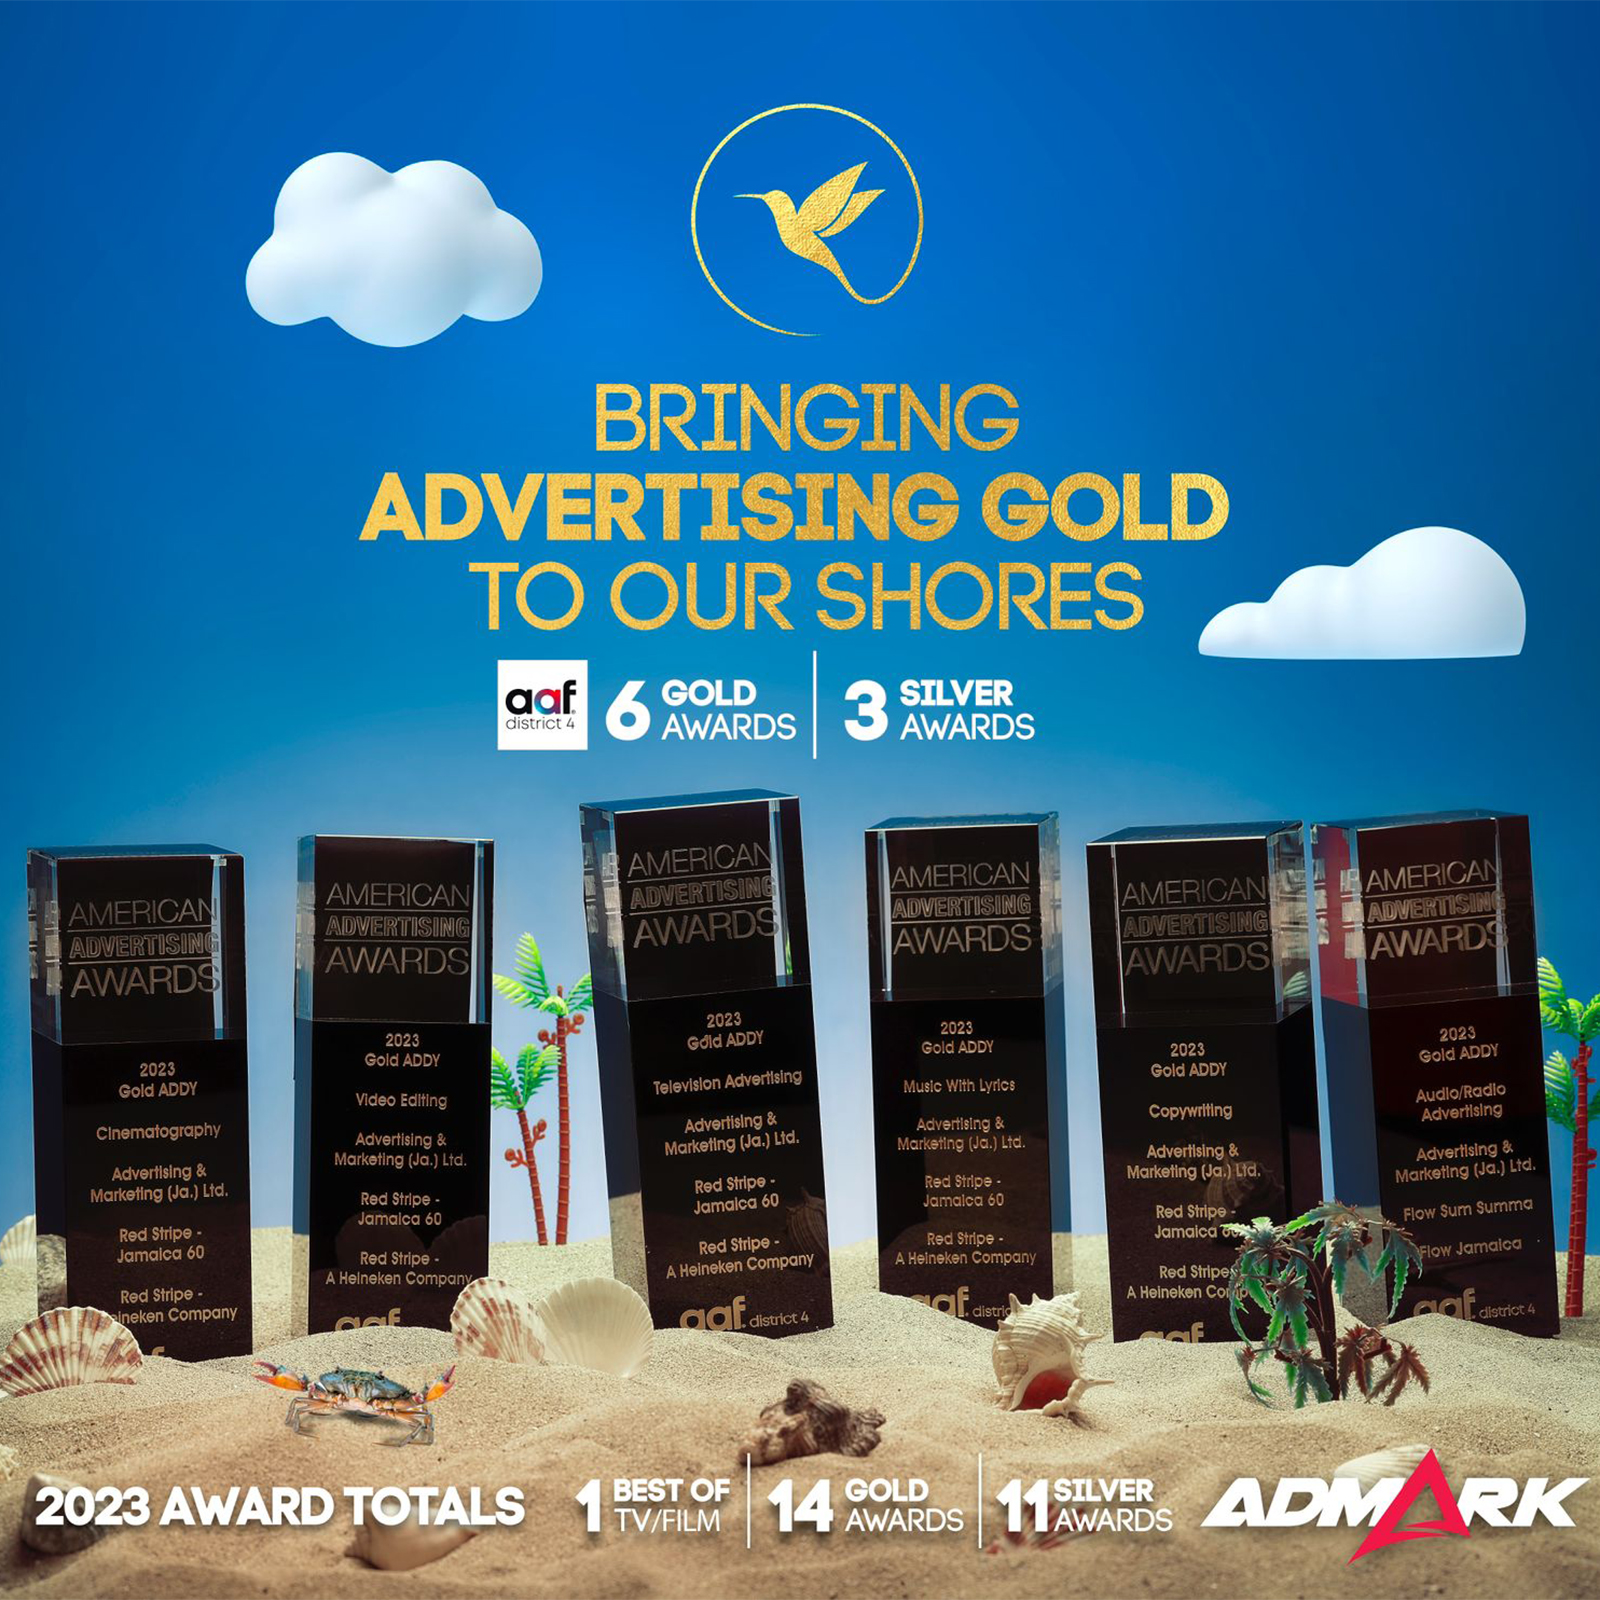 2023-Awards-AdMark